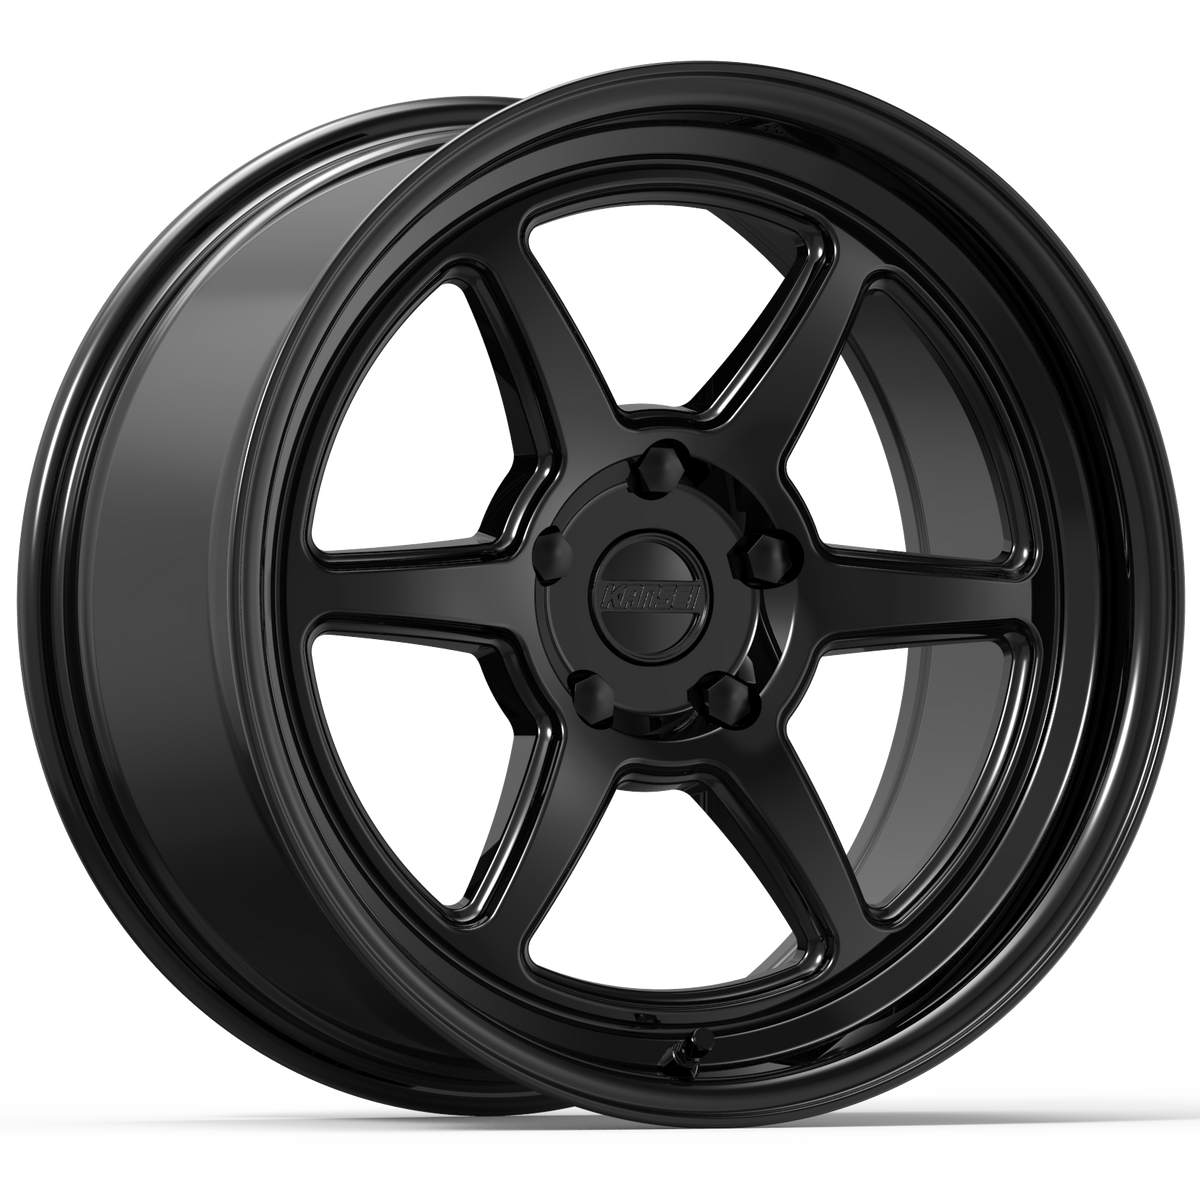 K14B ROKU Wheel, Size: 18" x 9.50", Bolt Pattern: 5 x 108 mm, Backspace: 6.75" [Finish: Gloss Black]